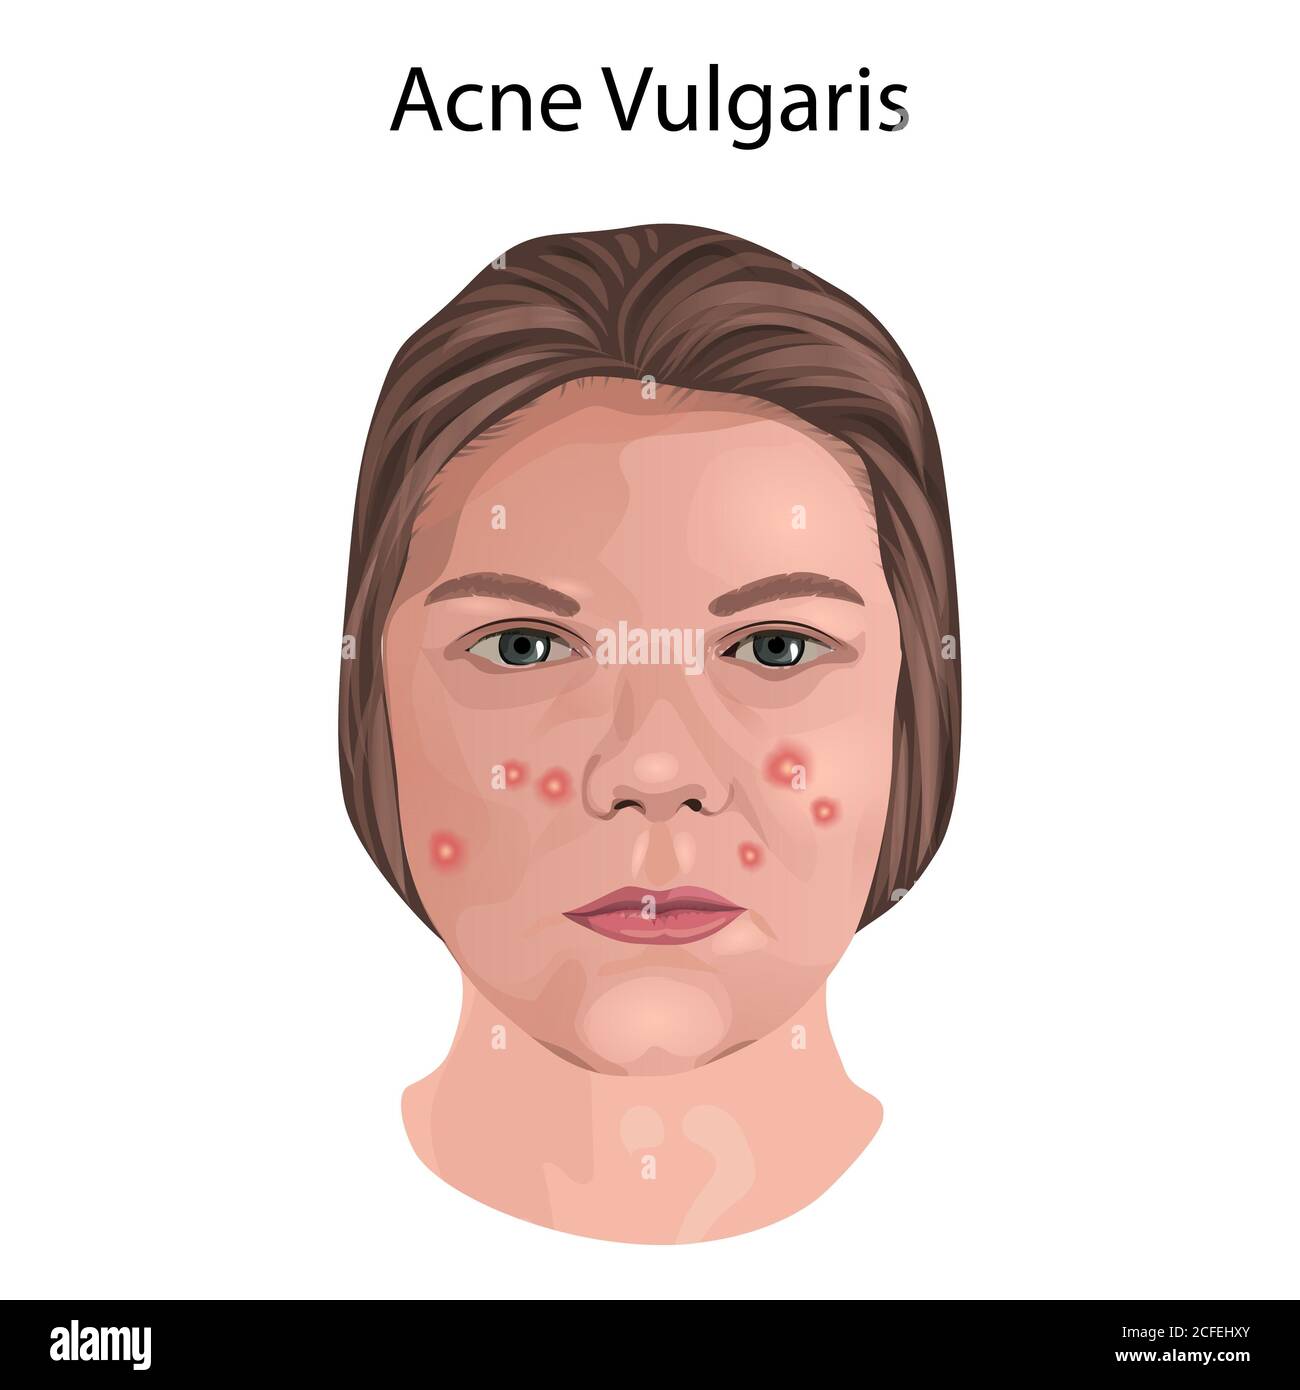 Acne Vulgaris Diagram